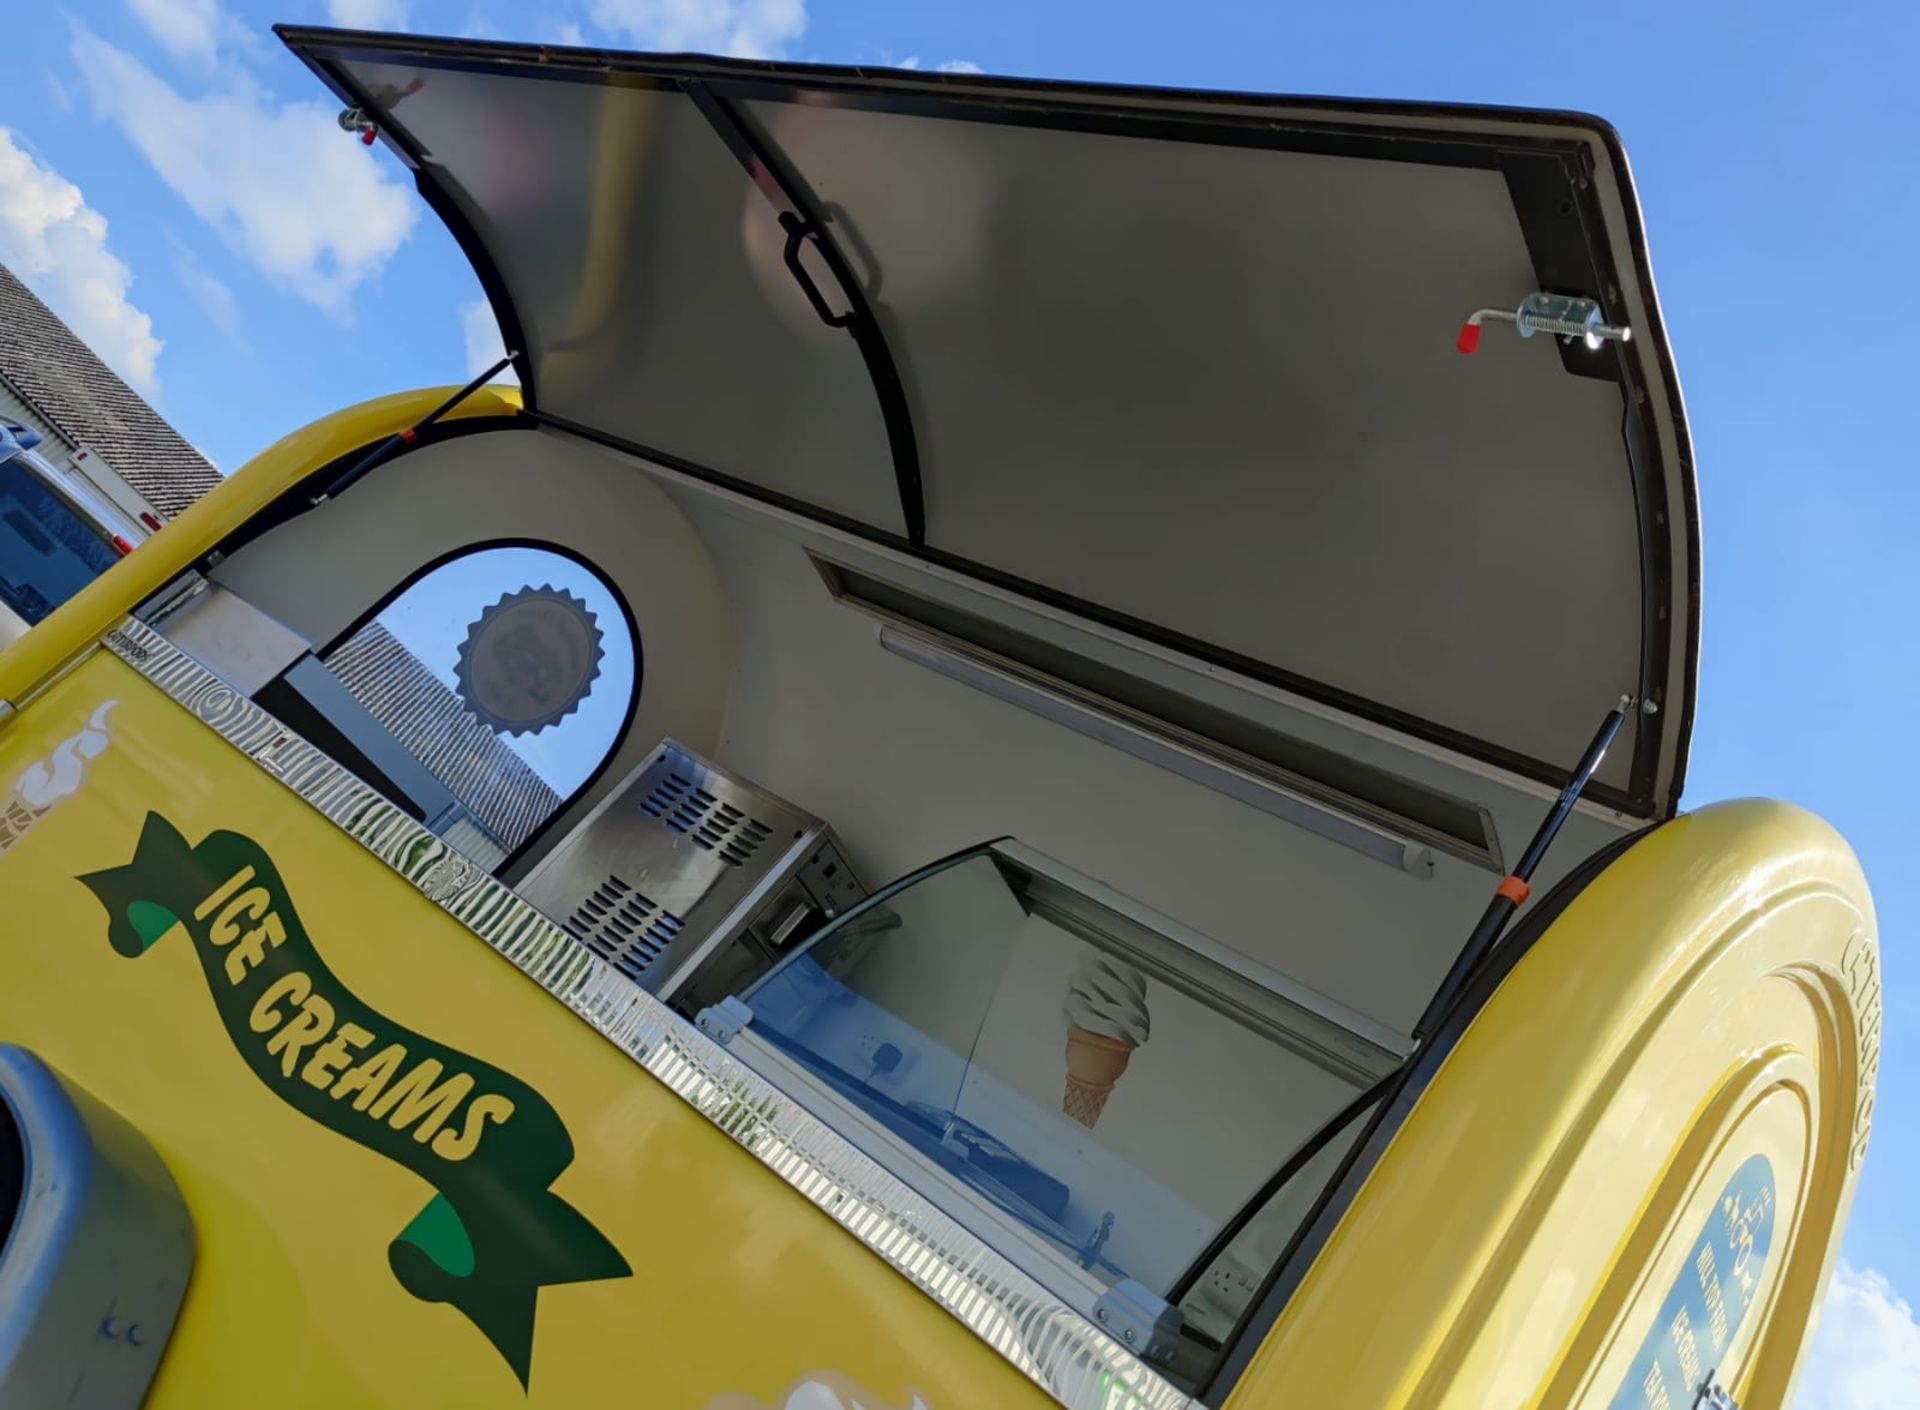 1 x Ice Cream Trailer Pod With Blue Ice T5 Ice Cream Machine, Chest Freezer, Cash Register & More! - Image 12 of 120